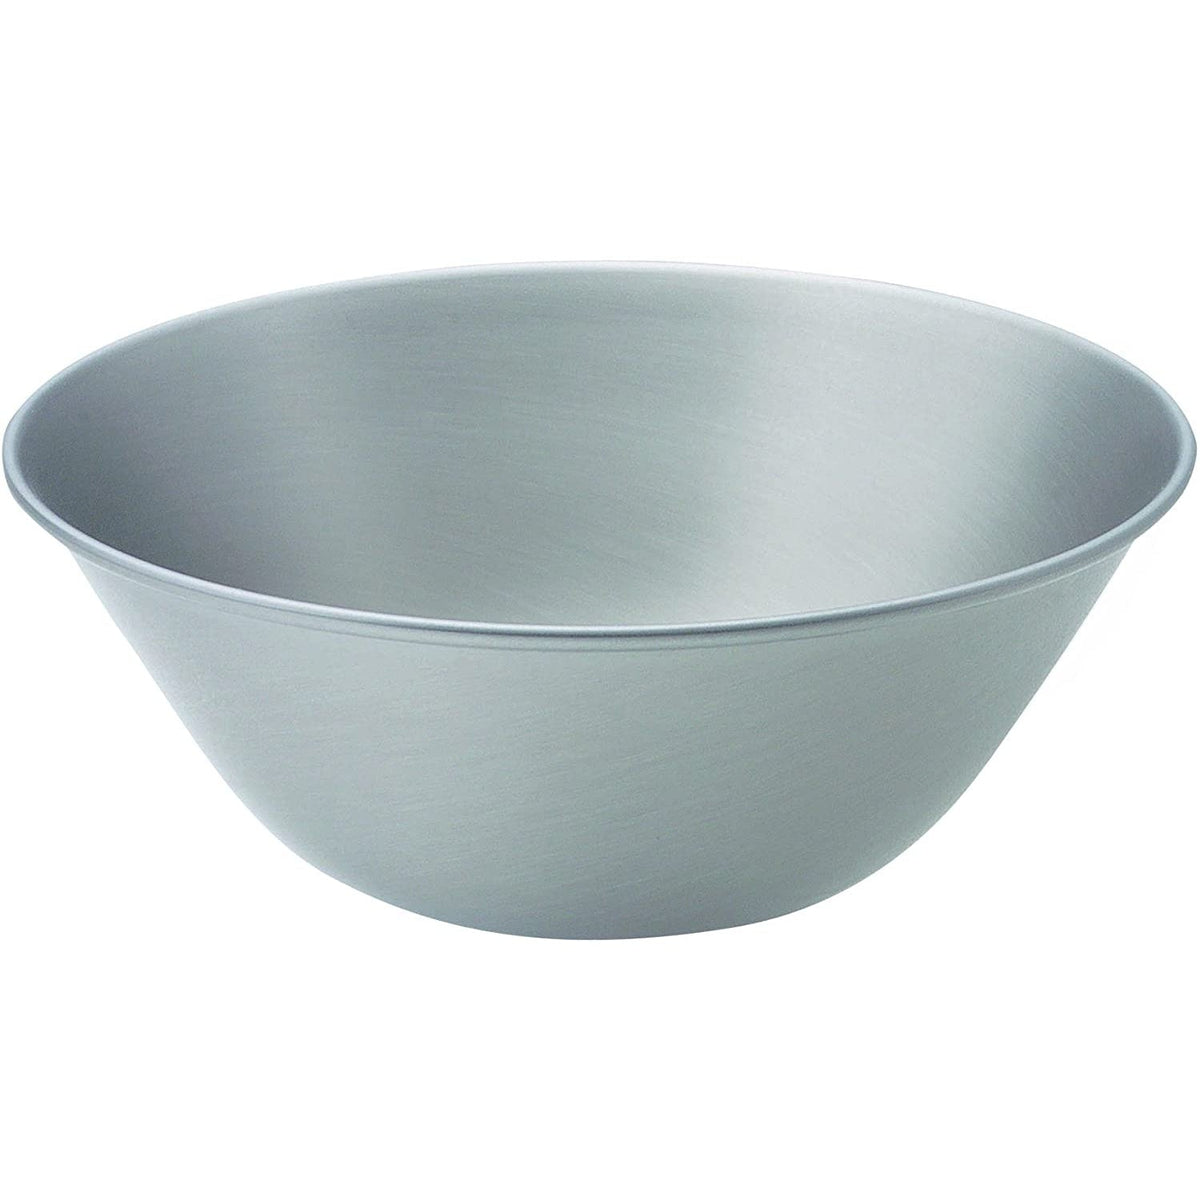 Large Plastic Mixing Bowl 3L / 5L Round Salad Serving Baking Bowl